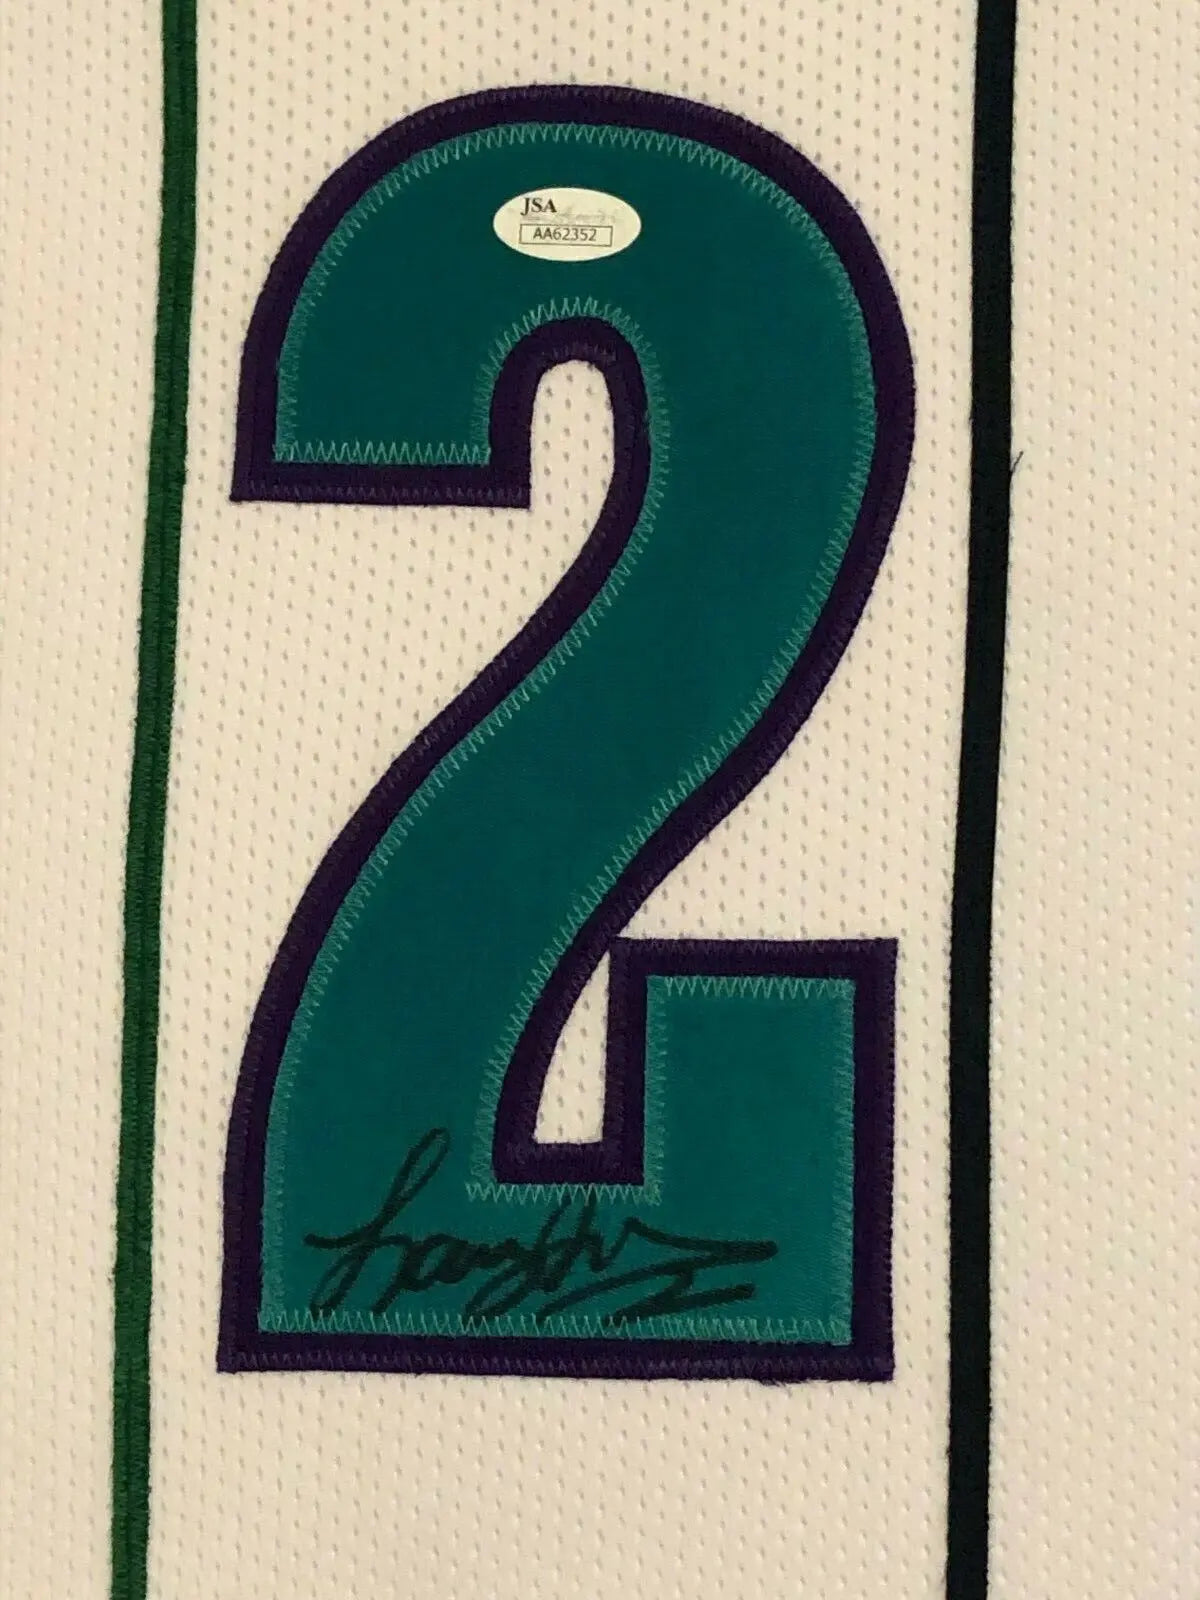 MVP Authentics Framed Charlotte Hornets Larry Johnson Signed Jersey Jsa Coa 360 sports jersey framing , jersey framing